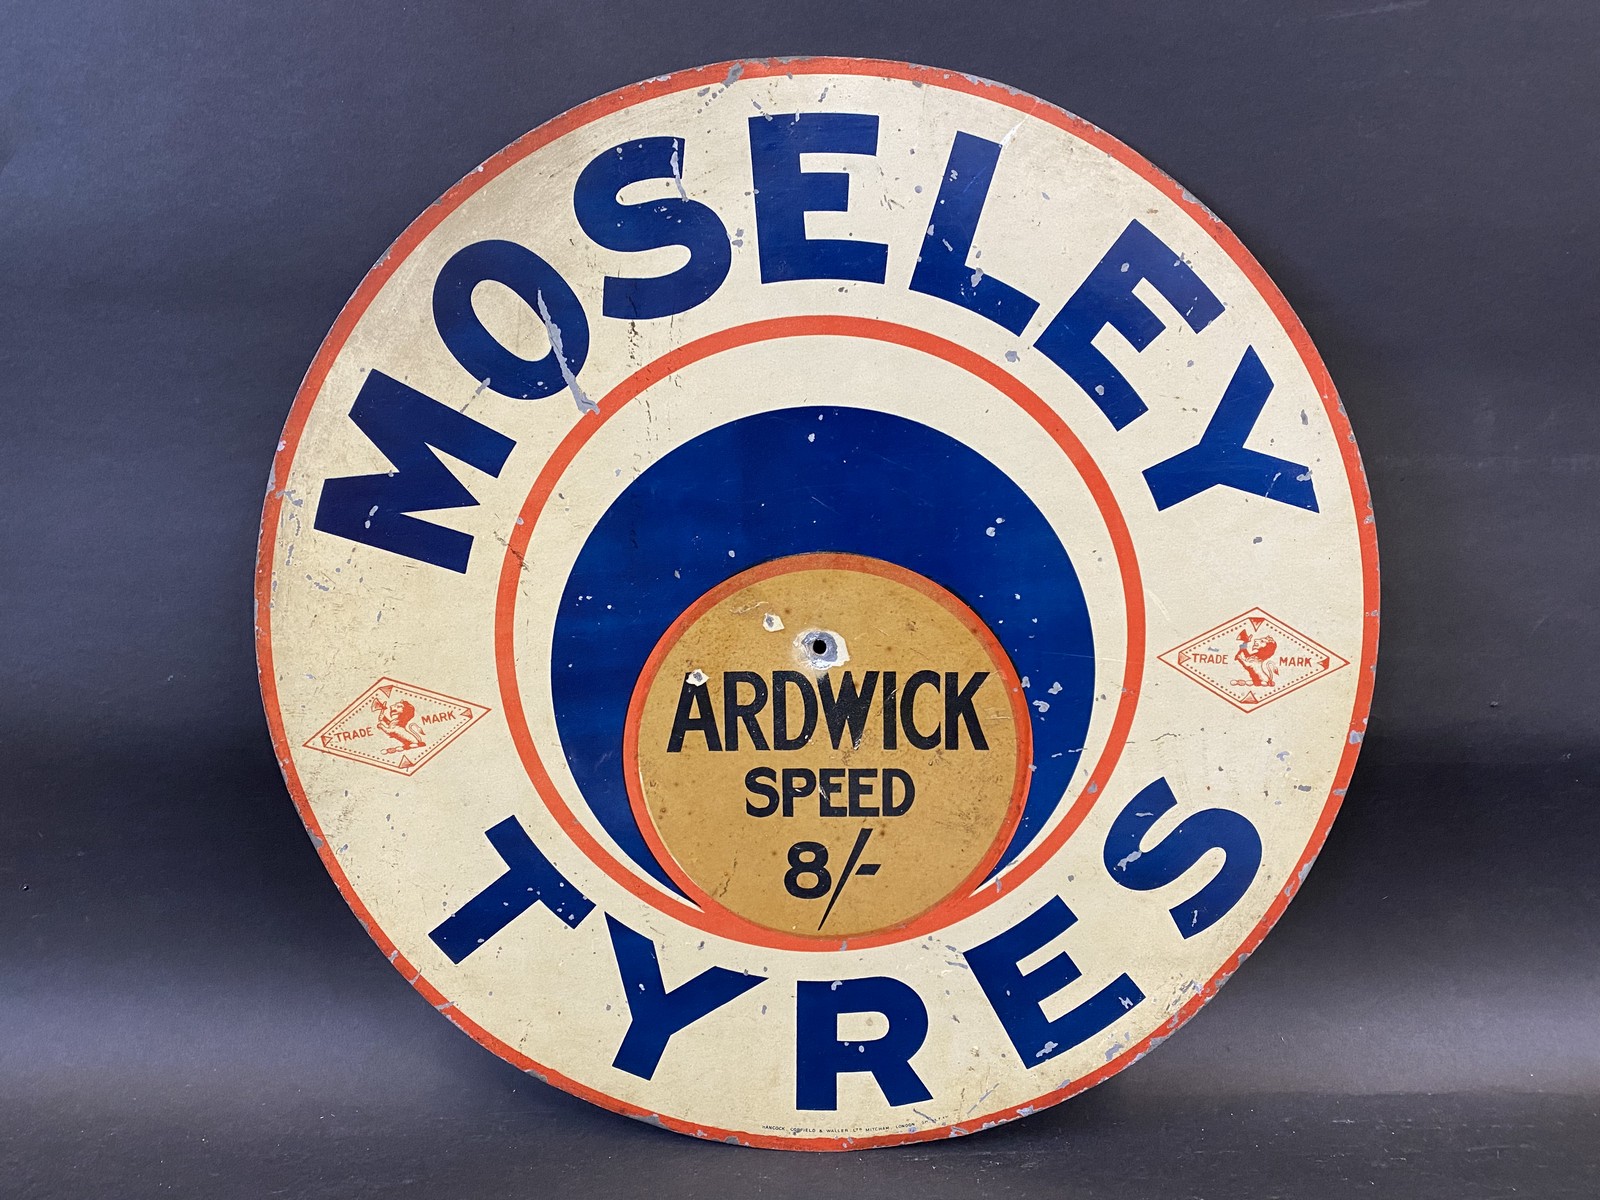 A rare single sided Moseley Tyres aluminium circular sign, advertising Ardwick speed 8/-, in good